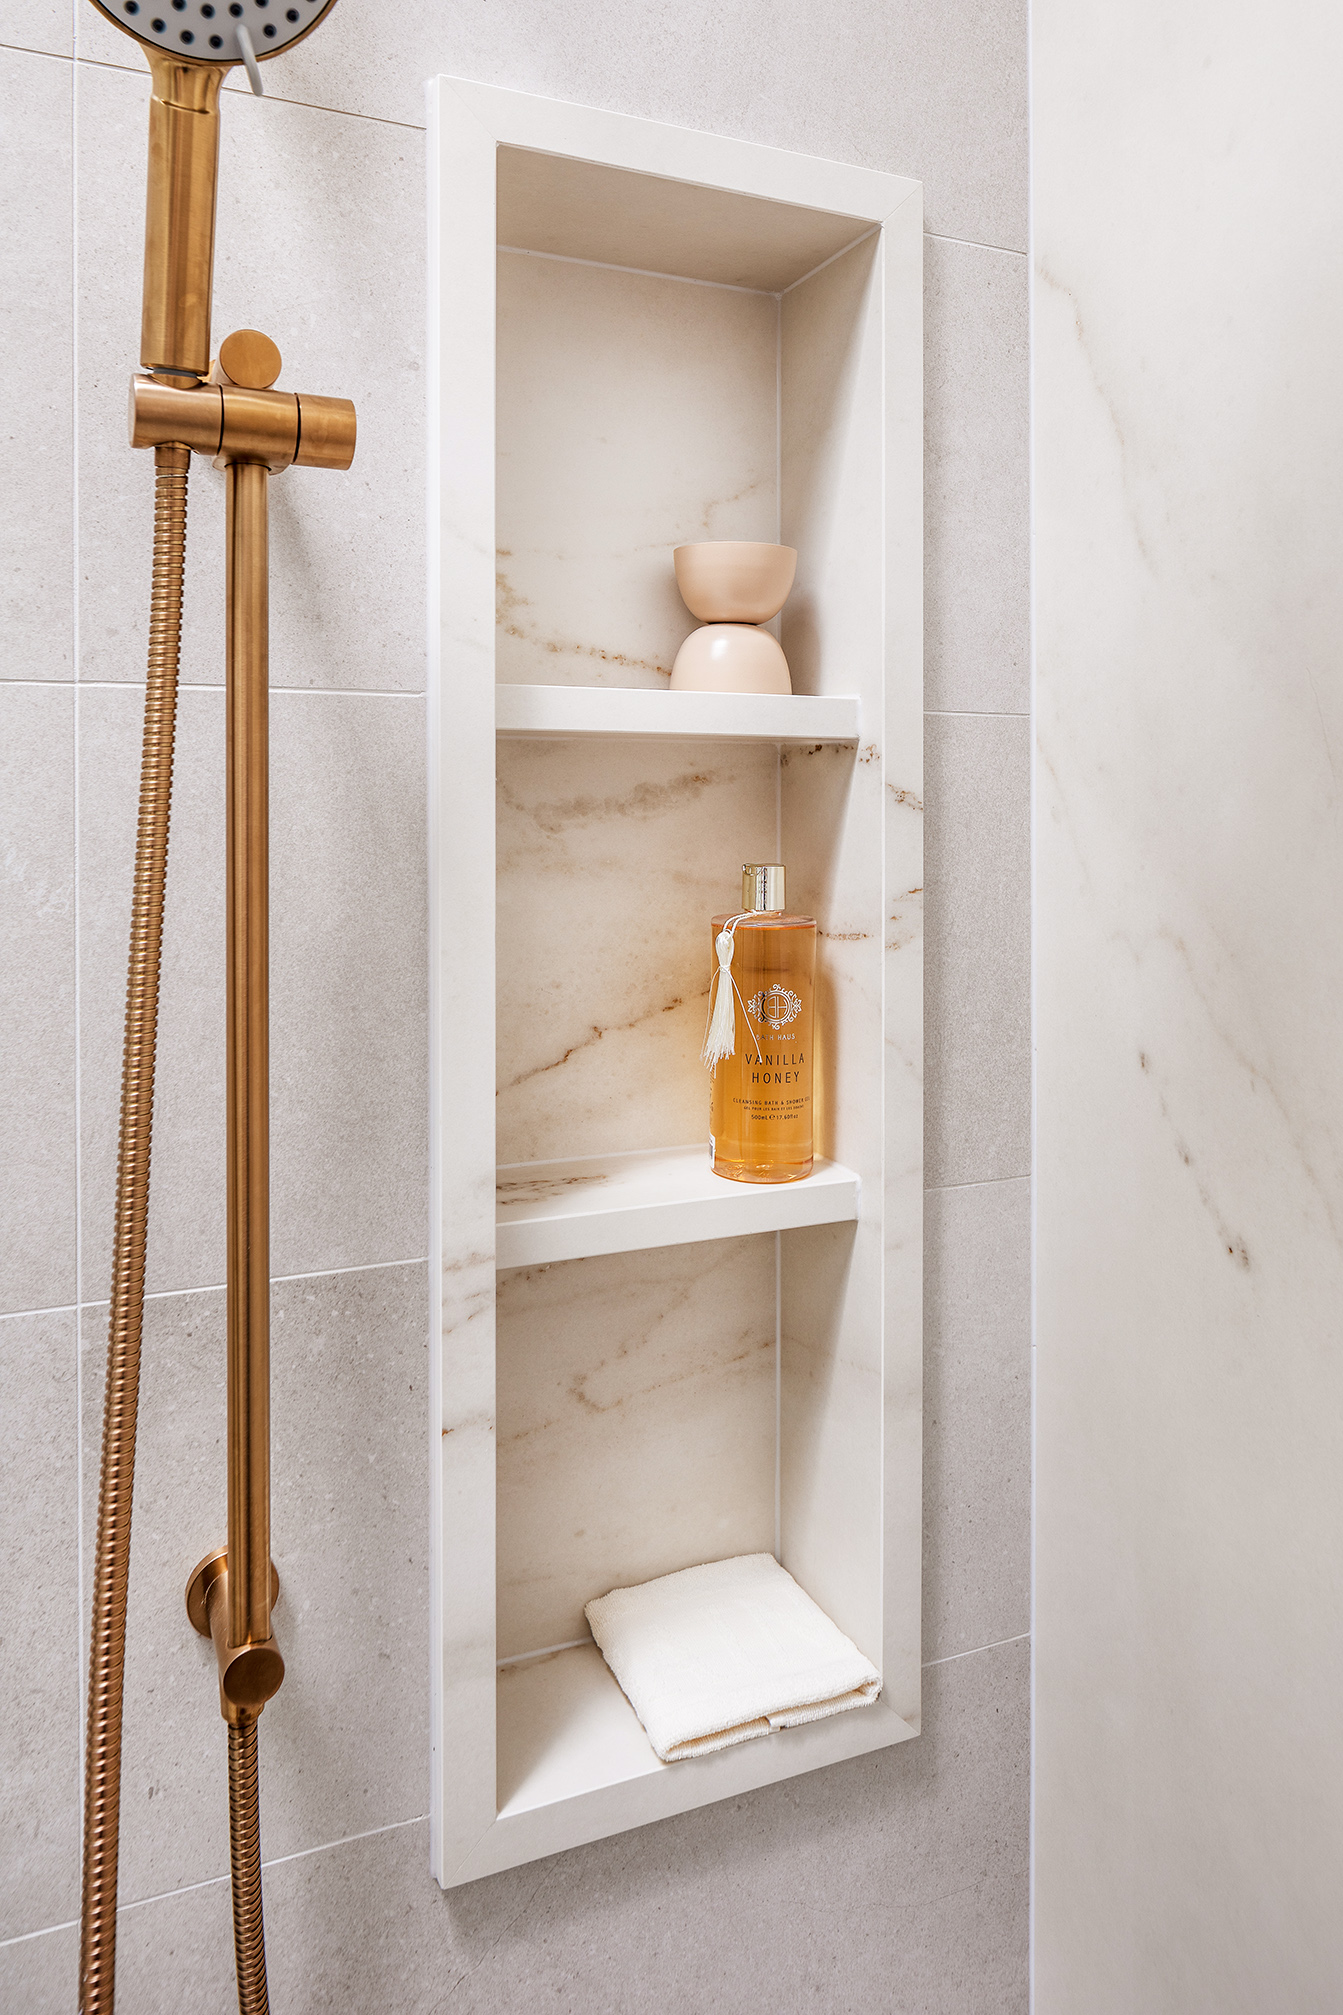 bravvo's rem dekton porcelain tile bathroom shower shelf